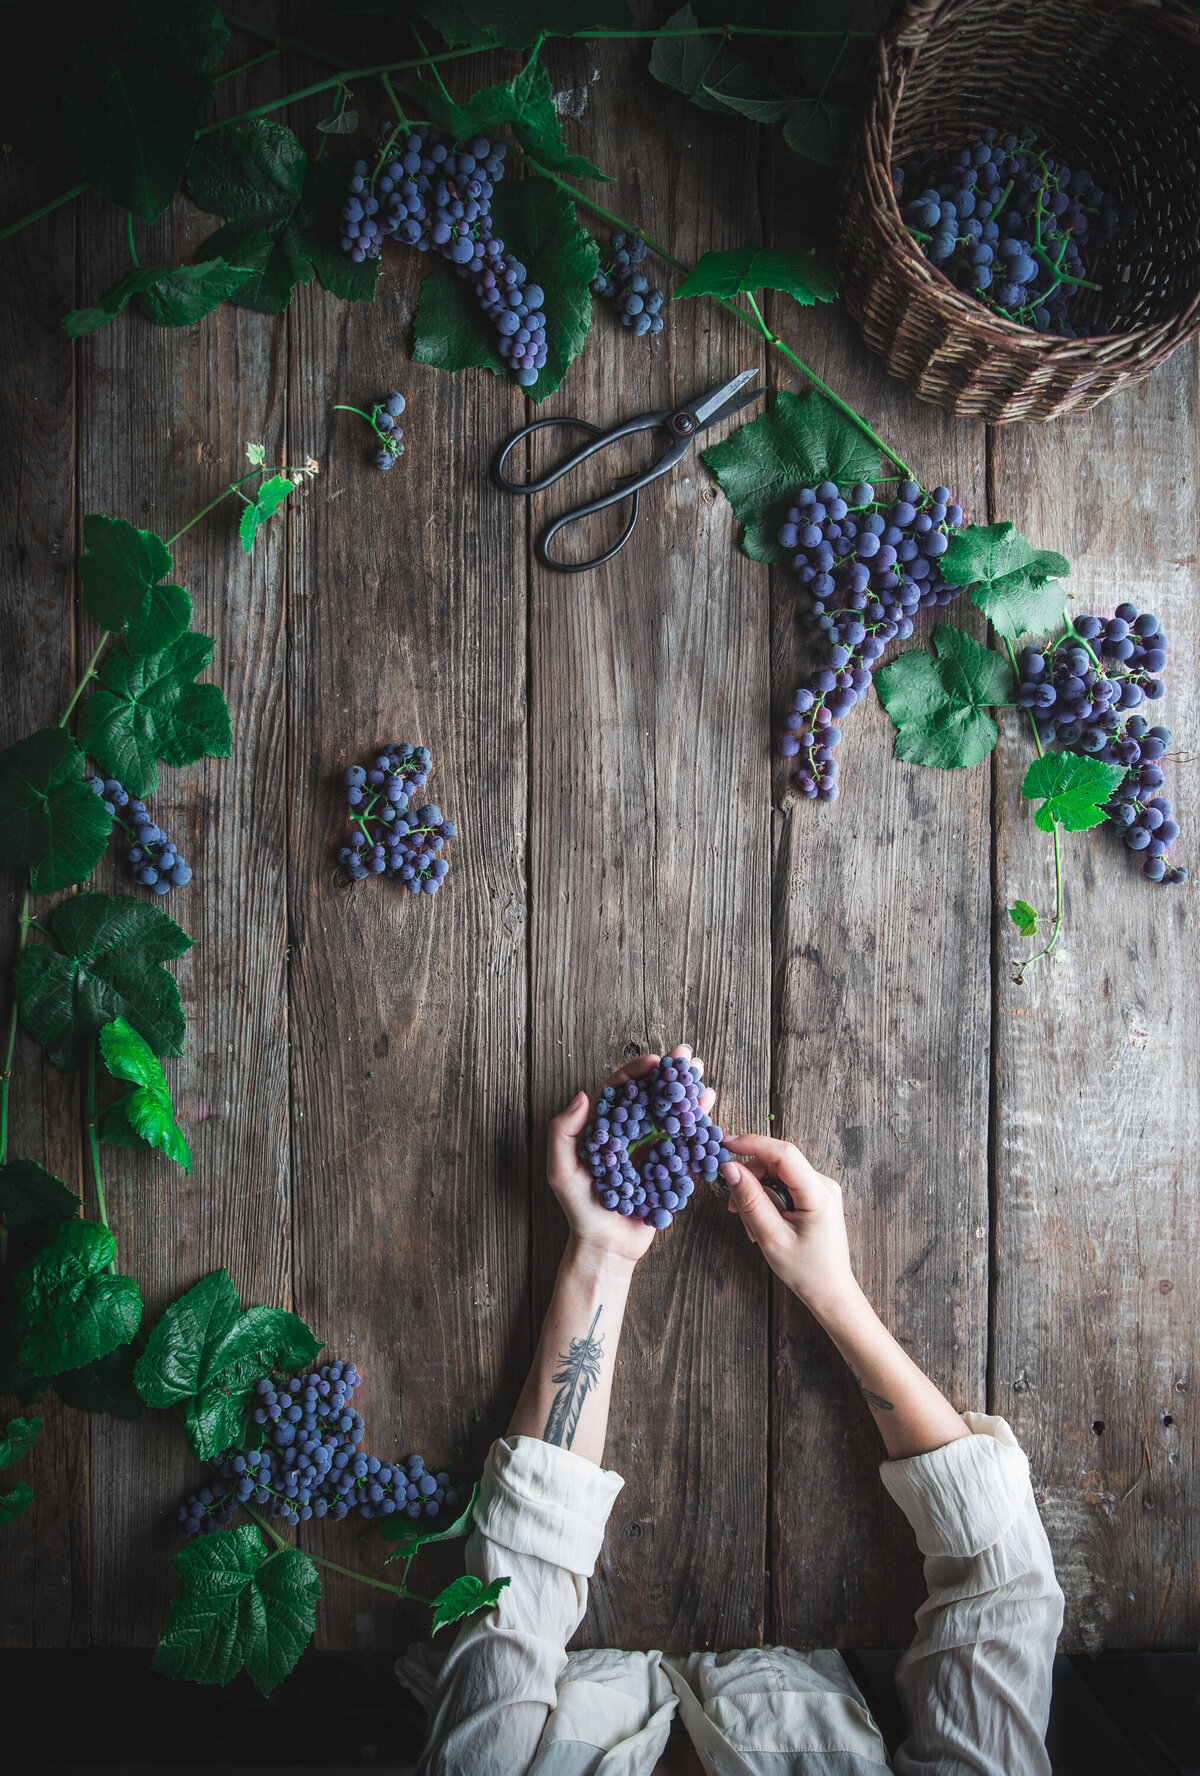 Grape and Almond Tart by Eva Kosmas Flores